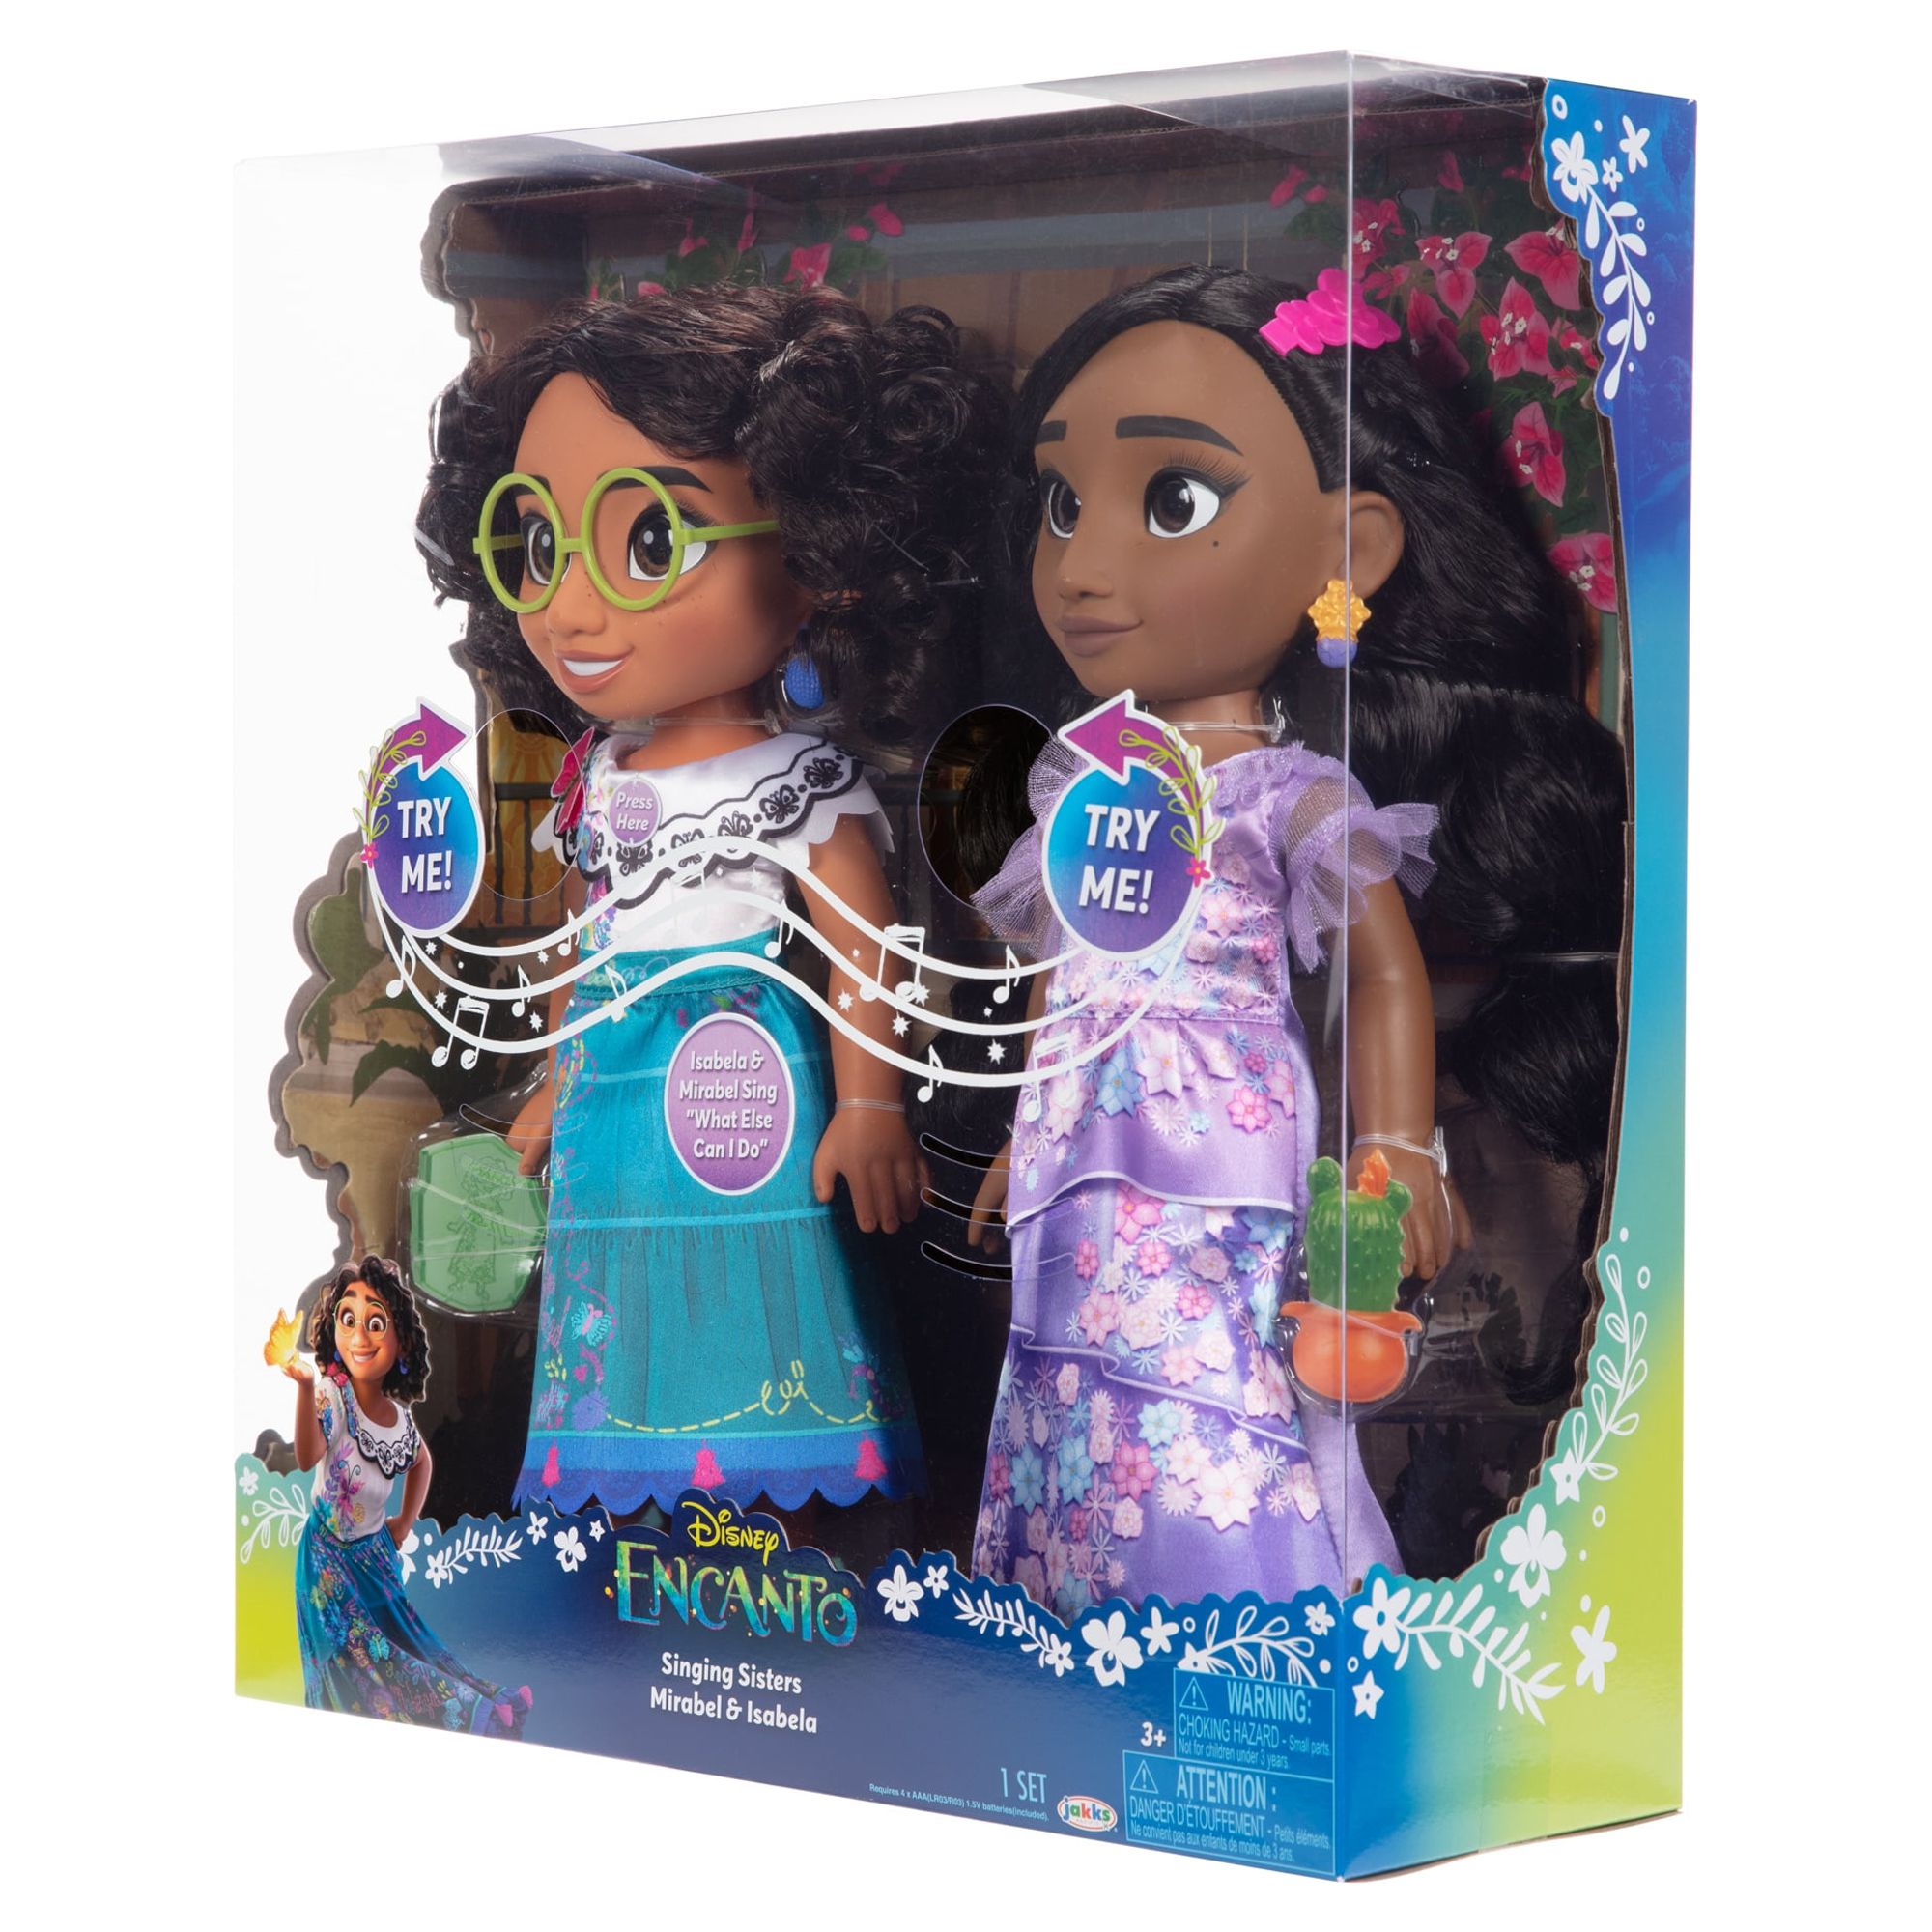 Disney's Encanto Singing Sisters Mirabel and Isabela Fashion Toddler Doll Gift Set - image 3 of 5